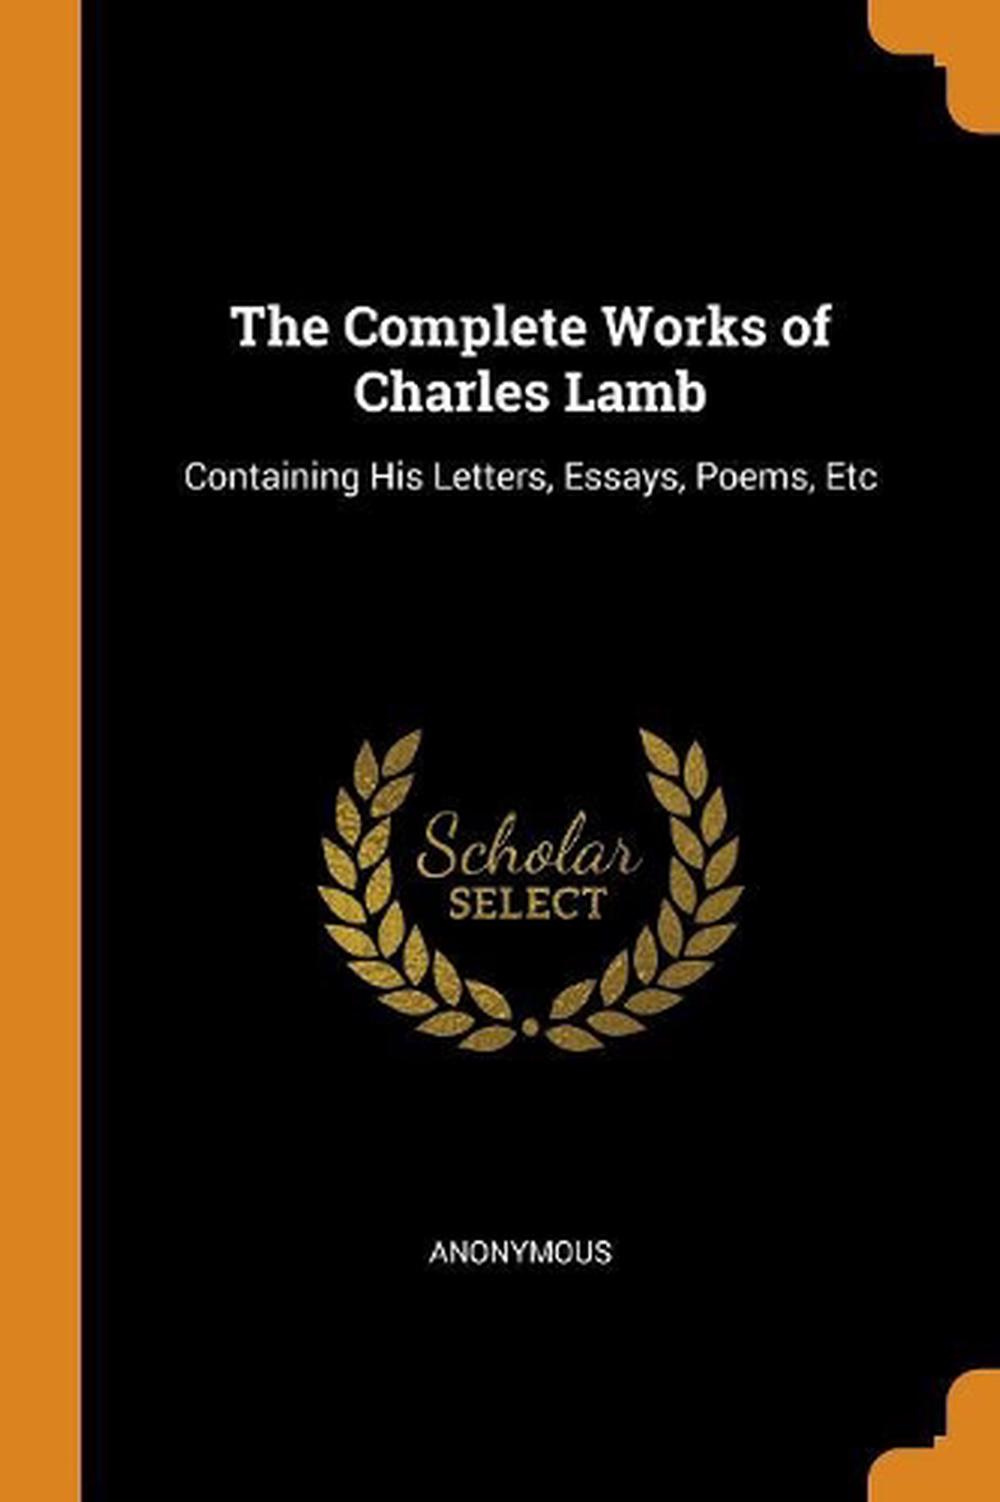 charles lamb wrote essay